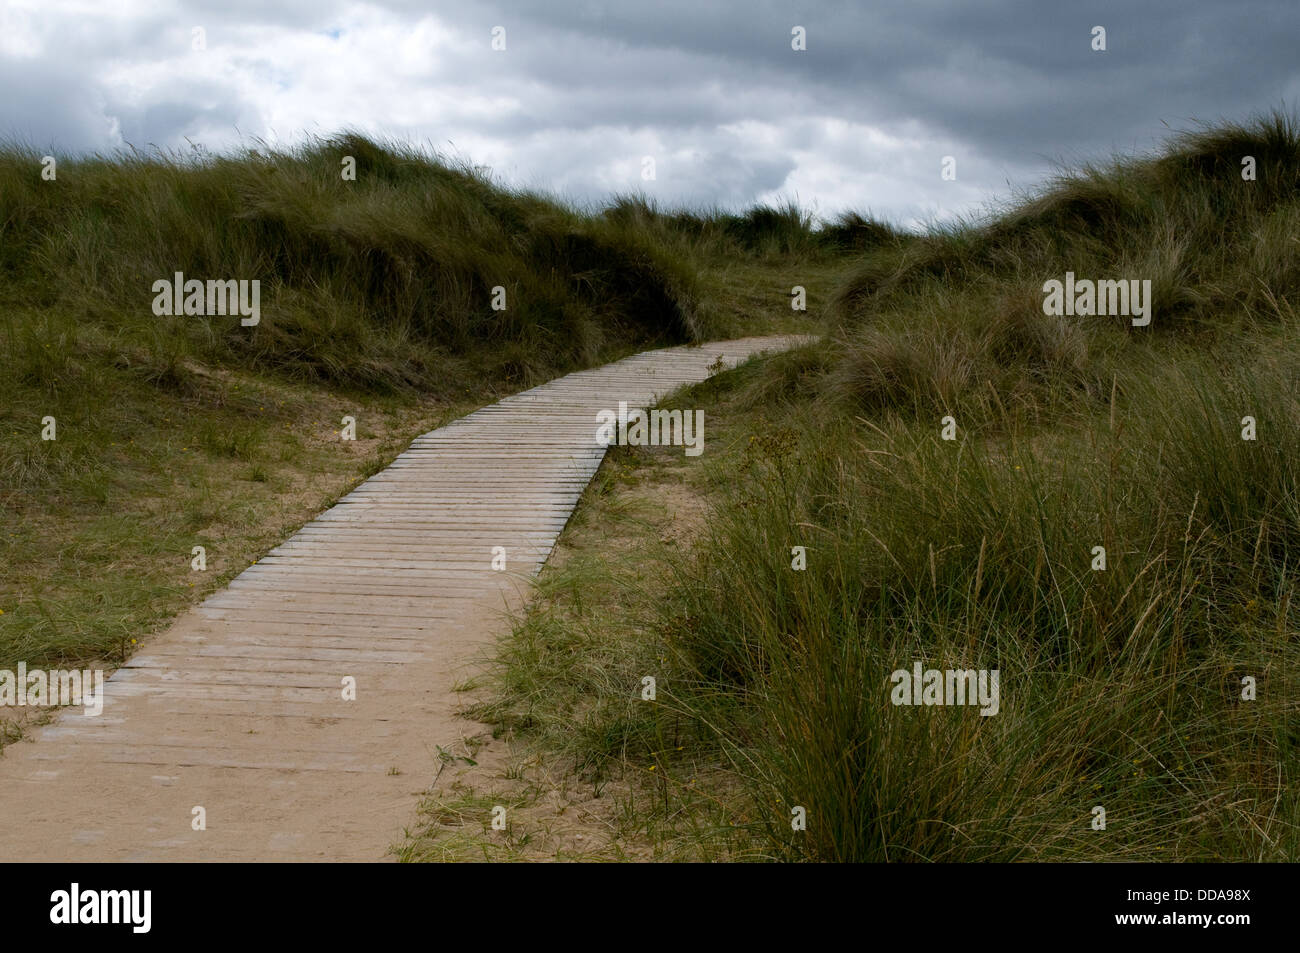 Timber boardwalk path winding past coastal sand dunes & grasses on edge of Holkham Beach nature reserve, under grey cloudy sky - Norfolk, England, UK. Stock Photo